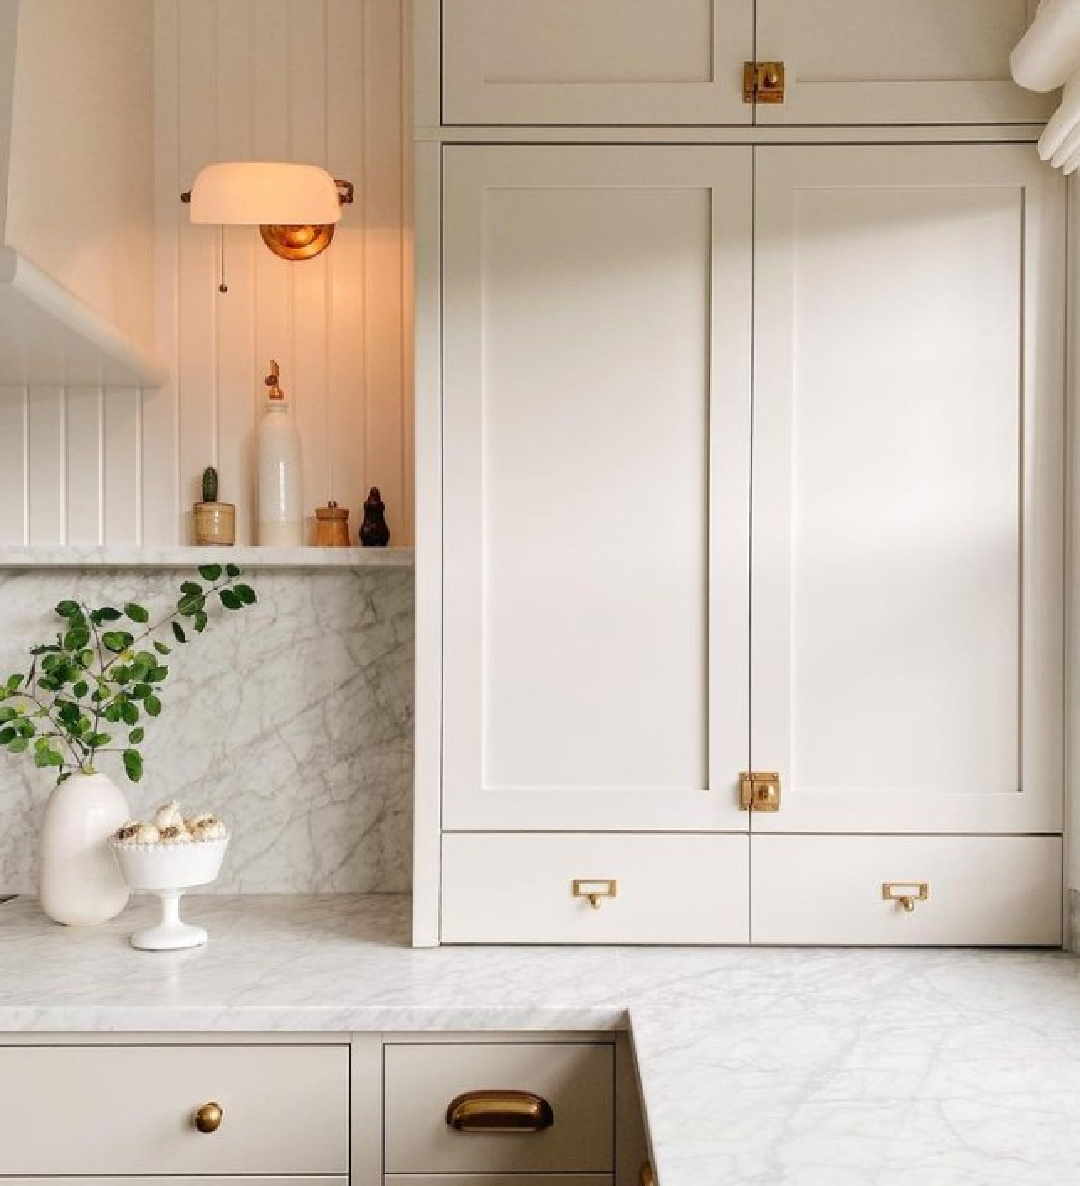 elegant kitchen color ideas with oak cabinets